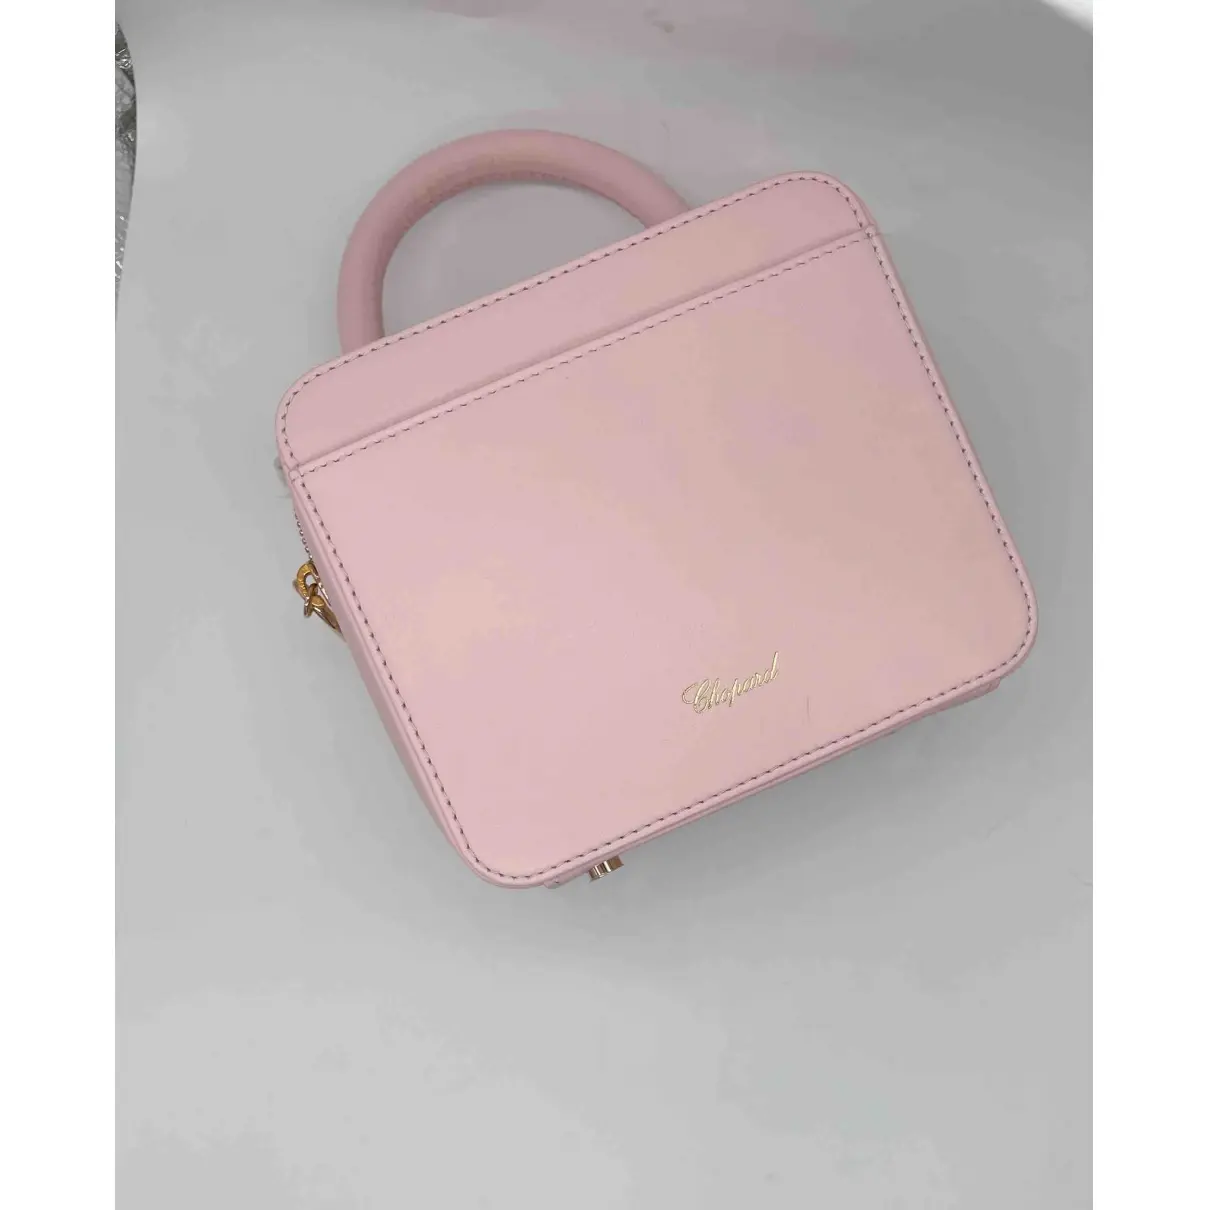 Buy Chopard Leather handbag online